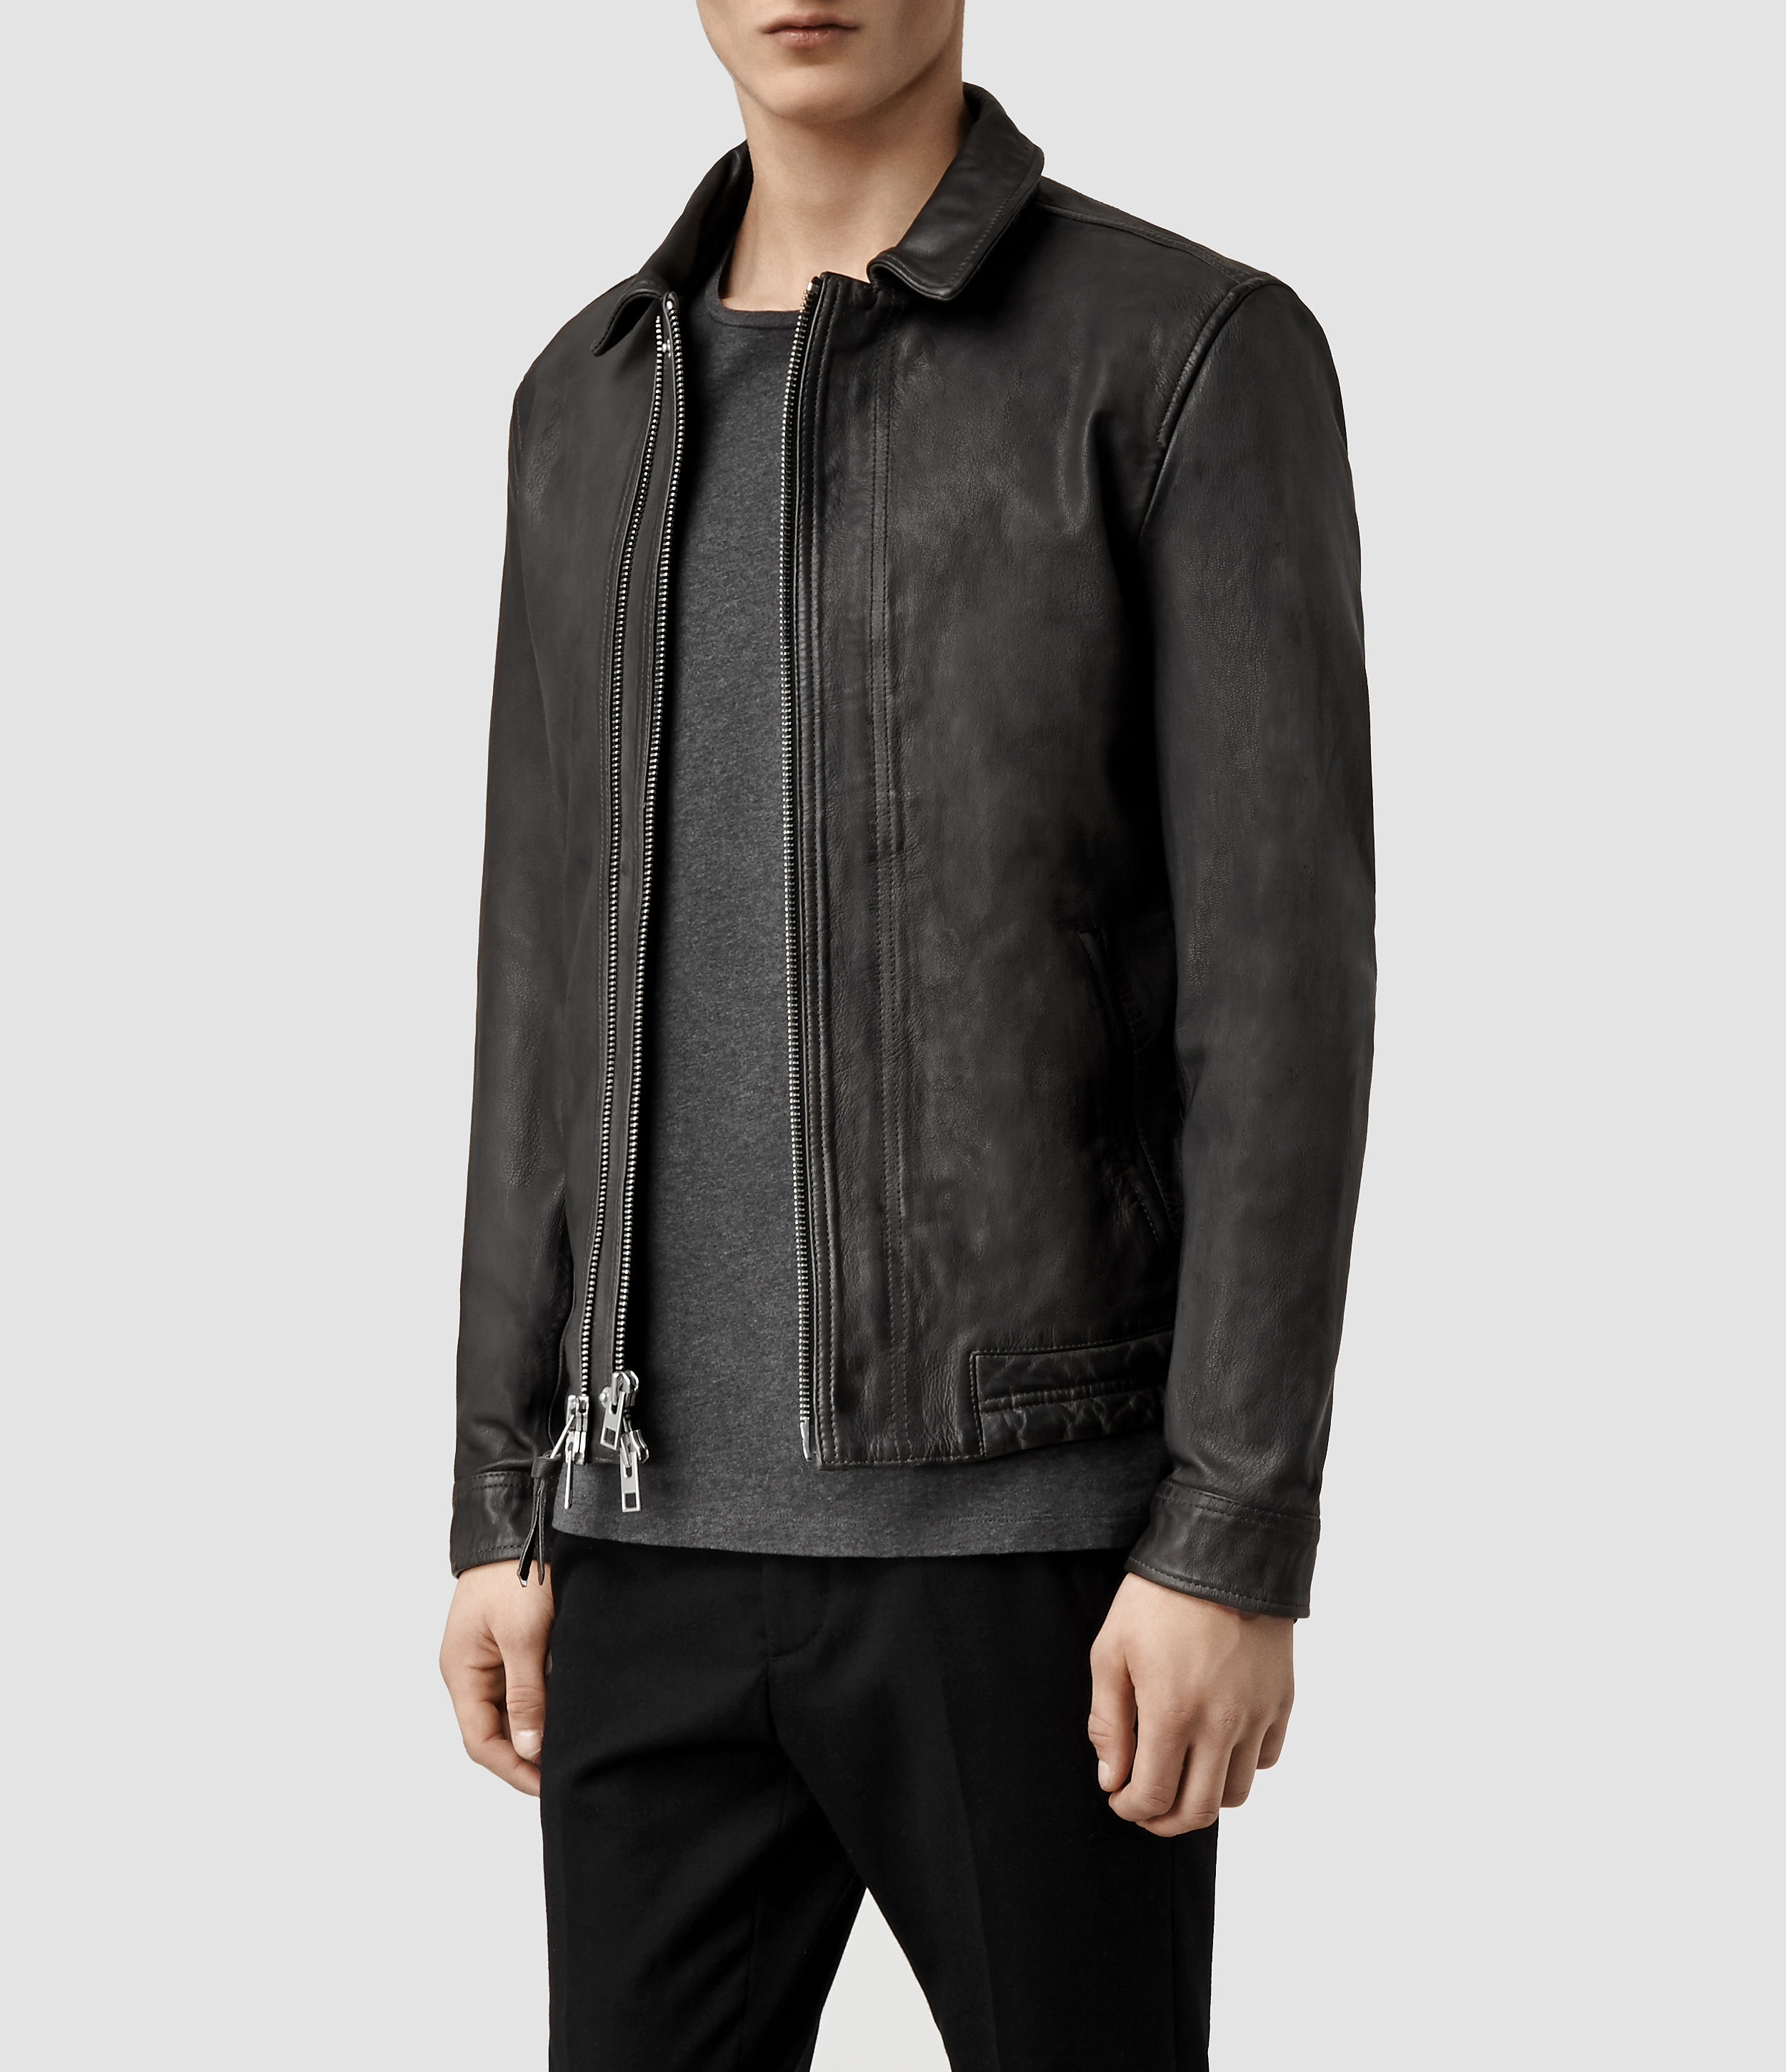 Lyst - Allsaints Varley Leather Jacket in Gray for Men